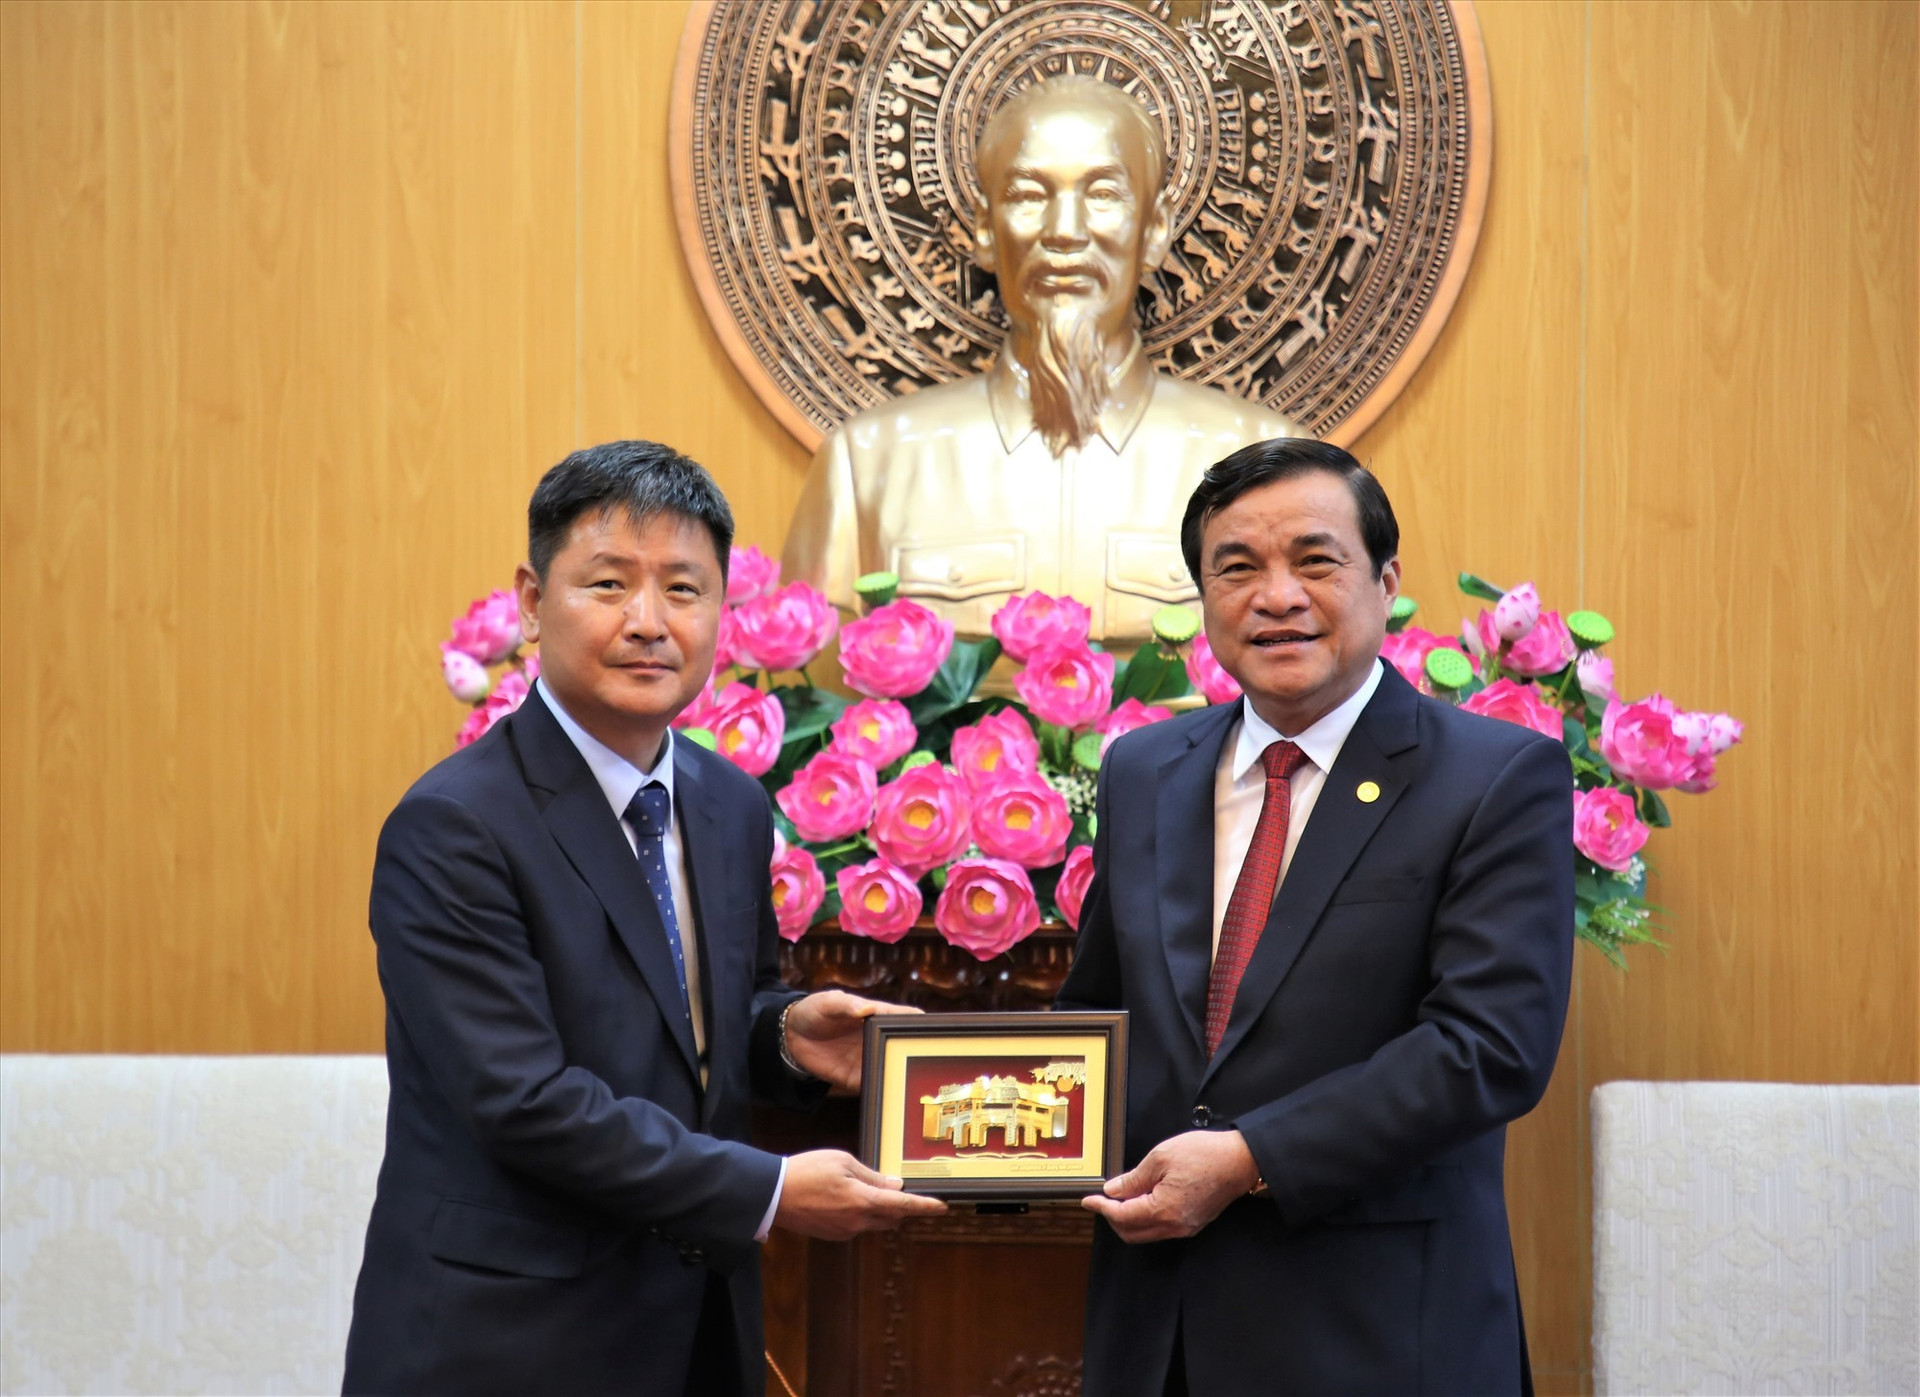 Quang Nam Party Secretary Phan Viet Cuong (right) and Kang Boo Sung